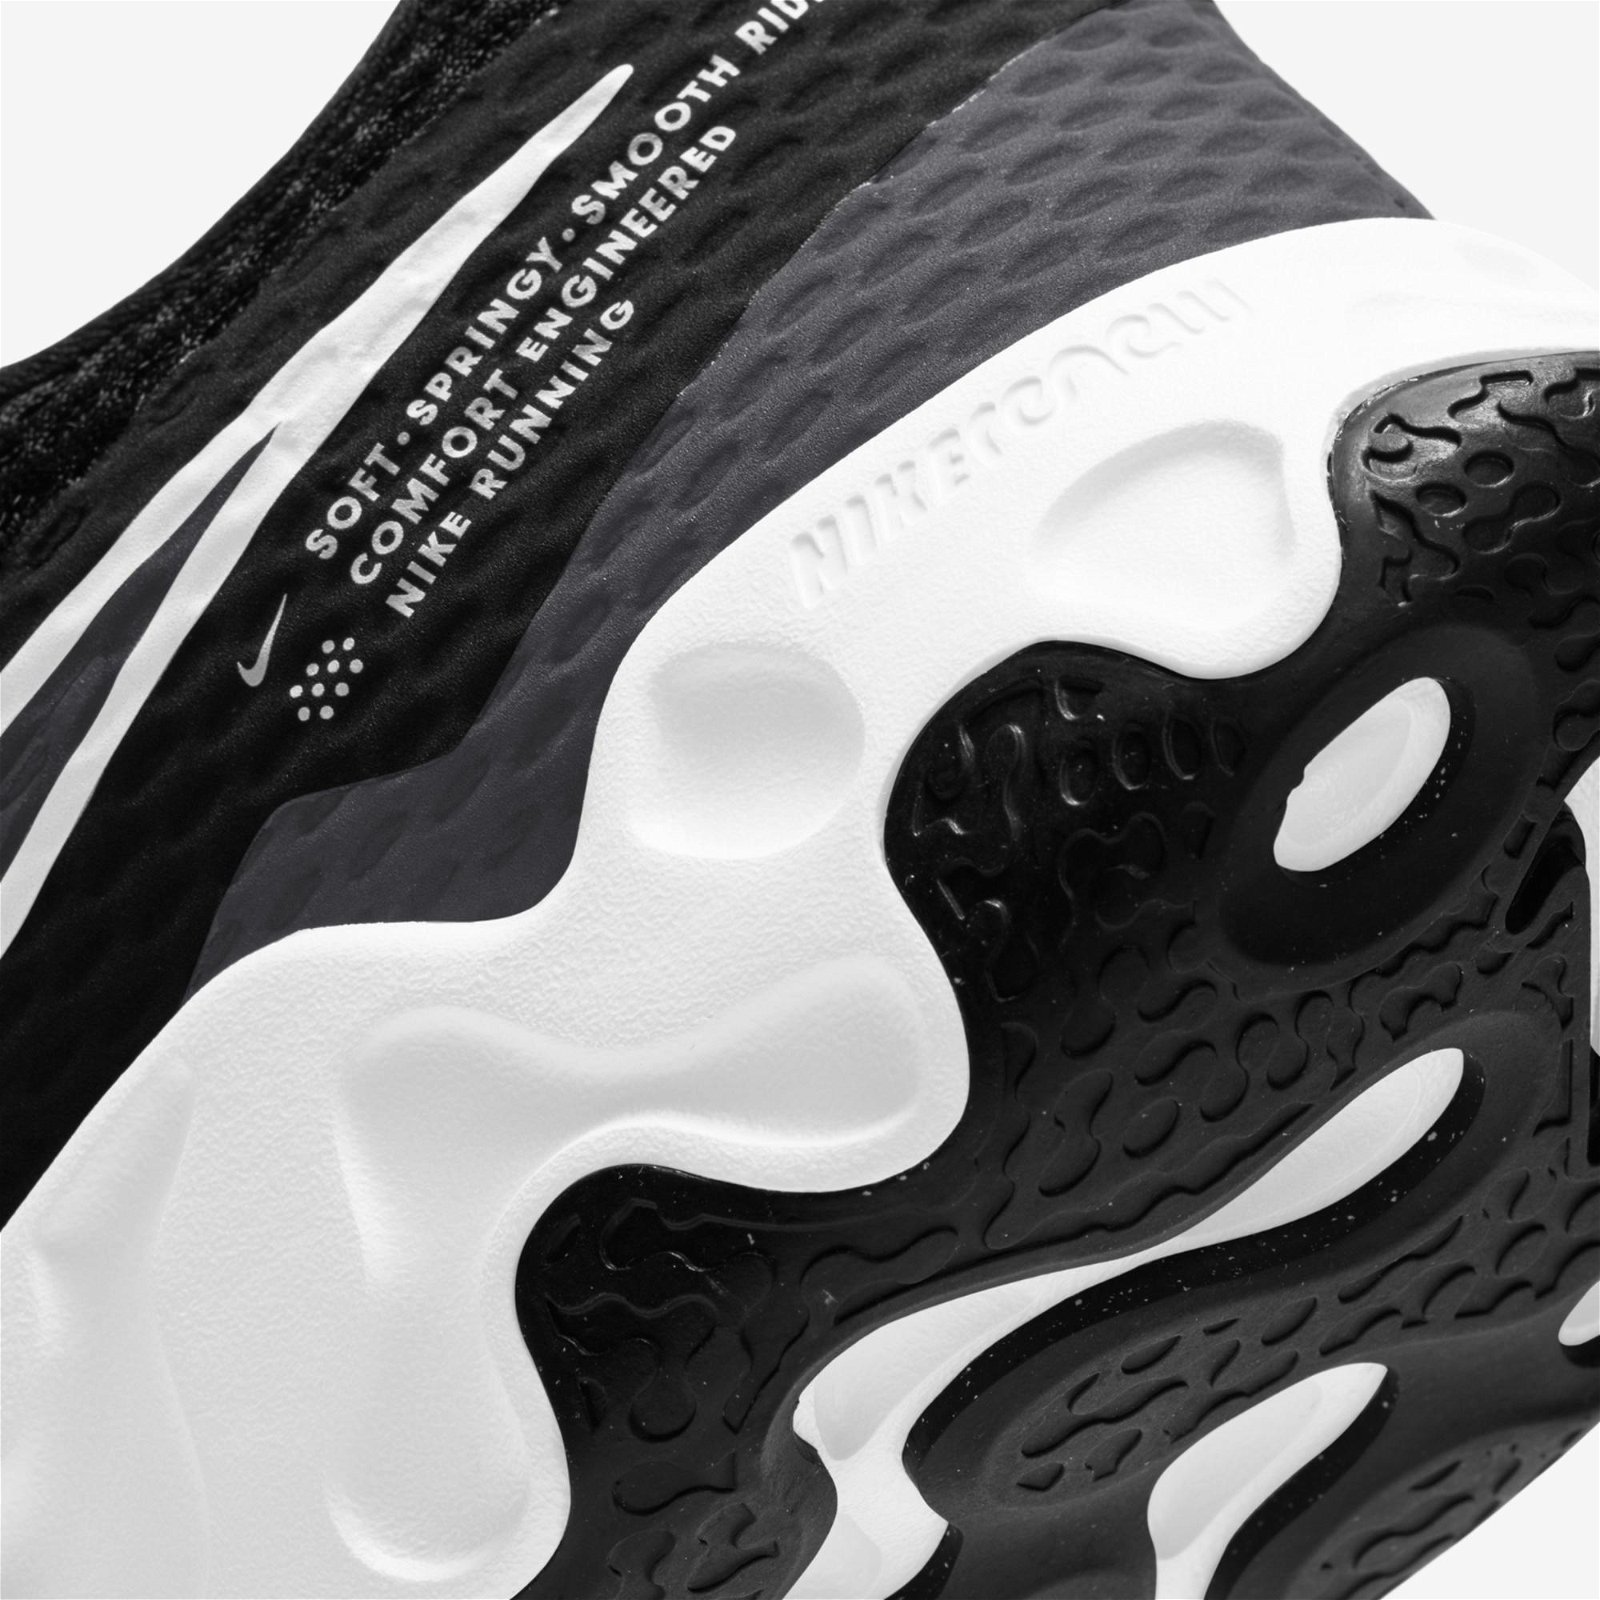 Nike Renew Ride 2 Erkek Siyah Spor Ayakkabı